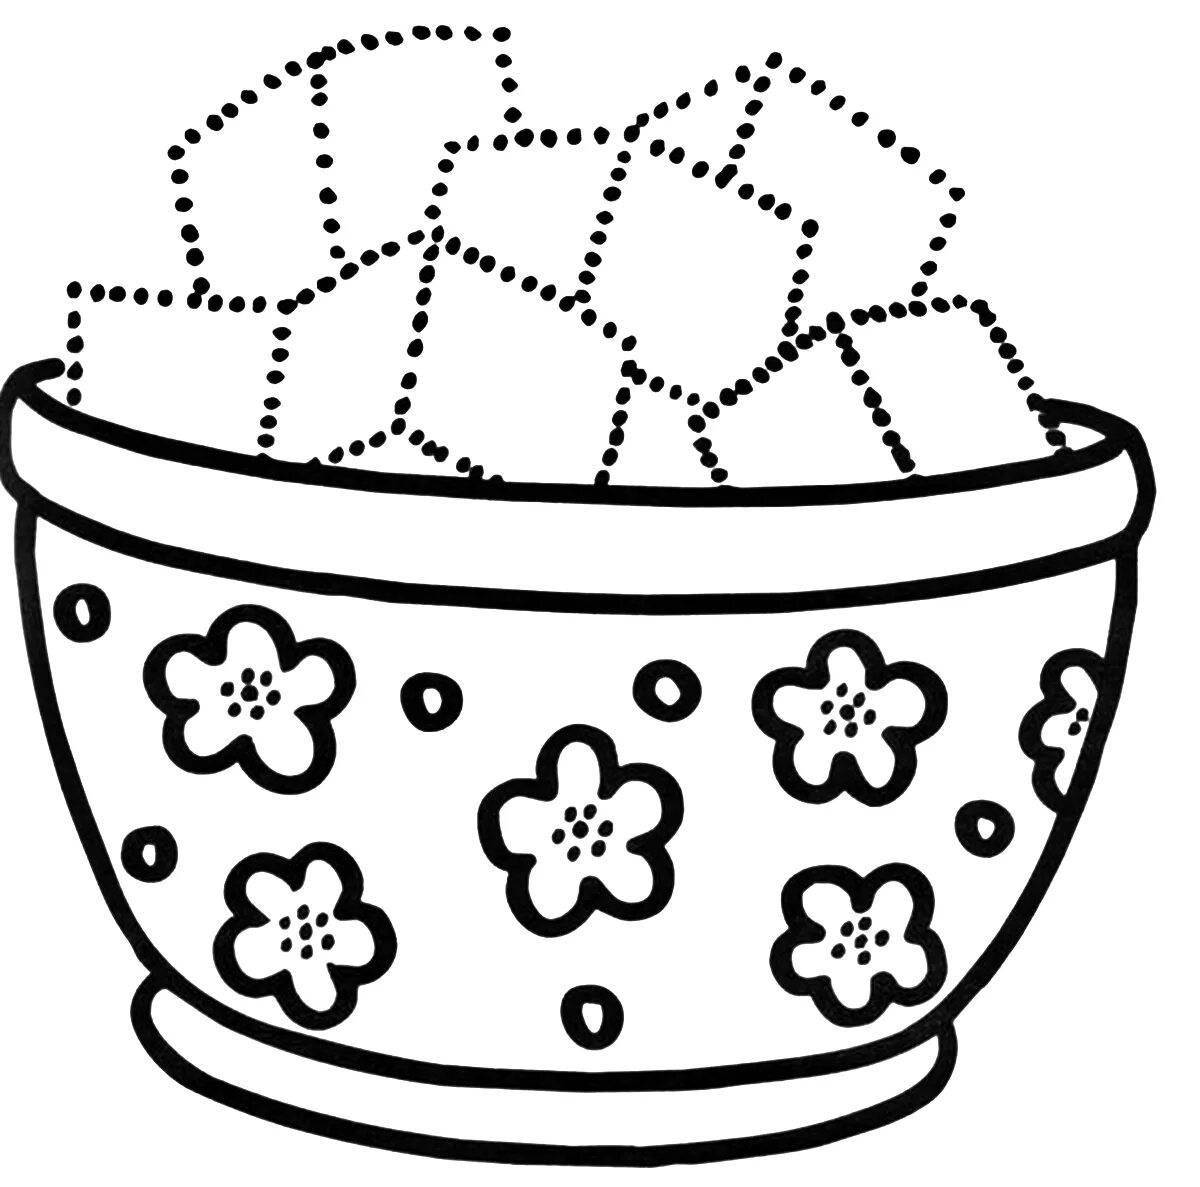 Shining Sugar Bowl Coloring Page for Students